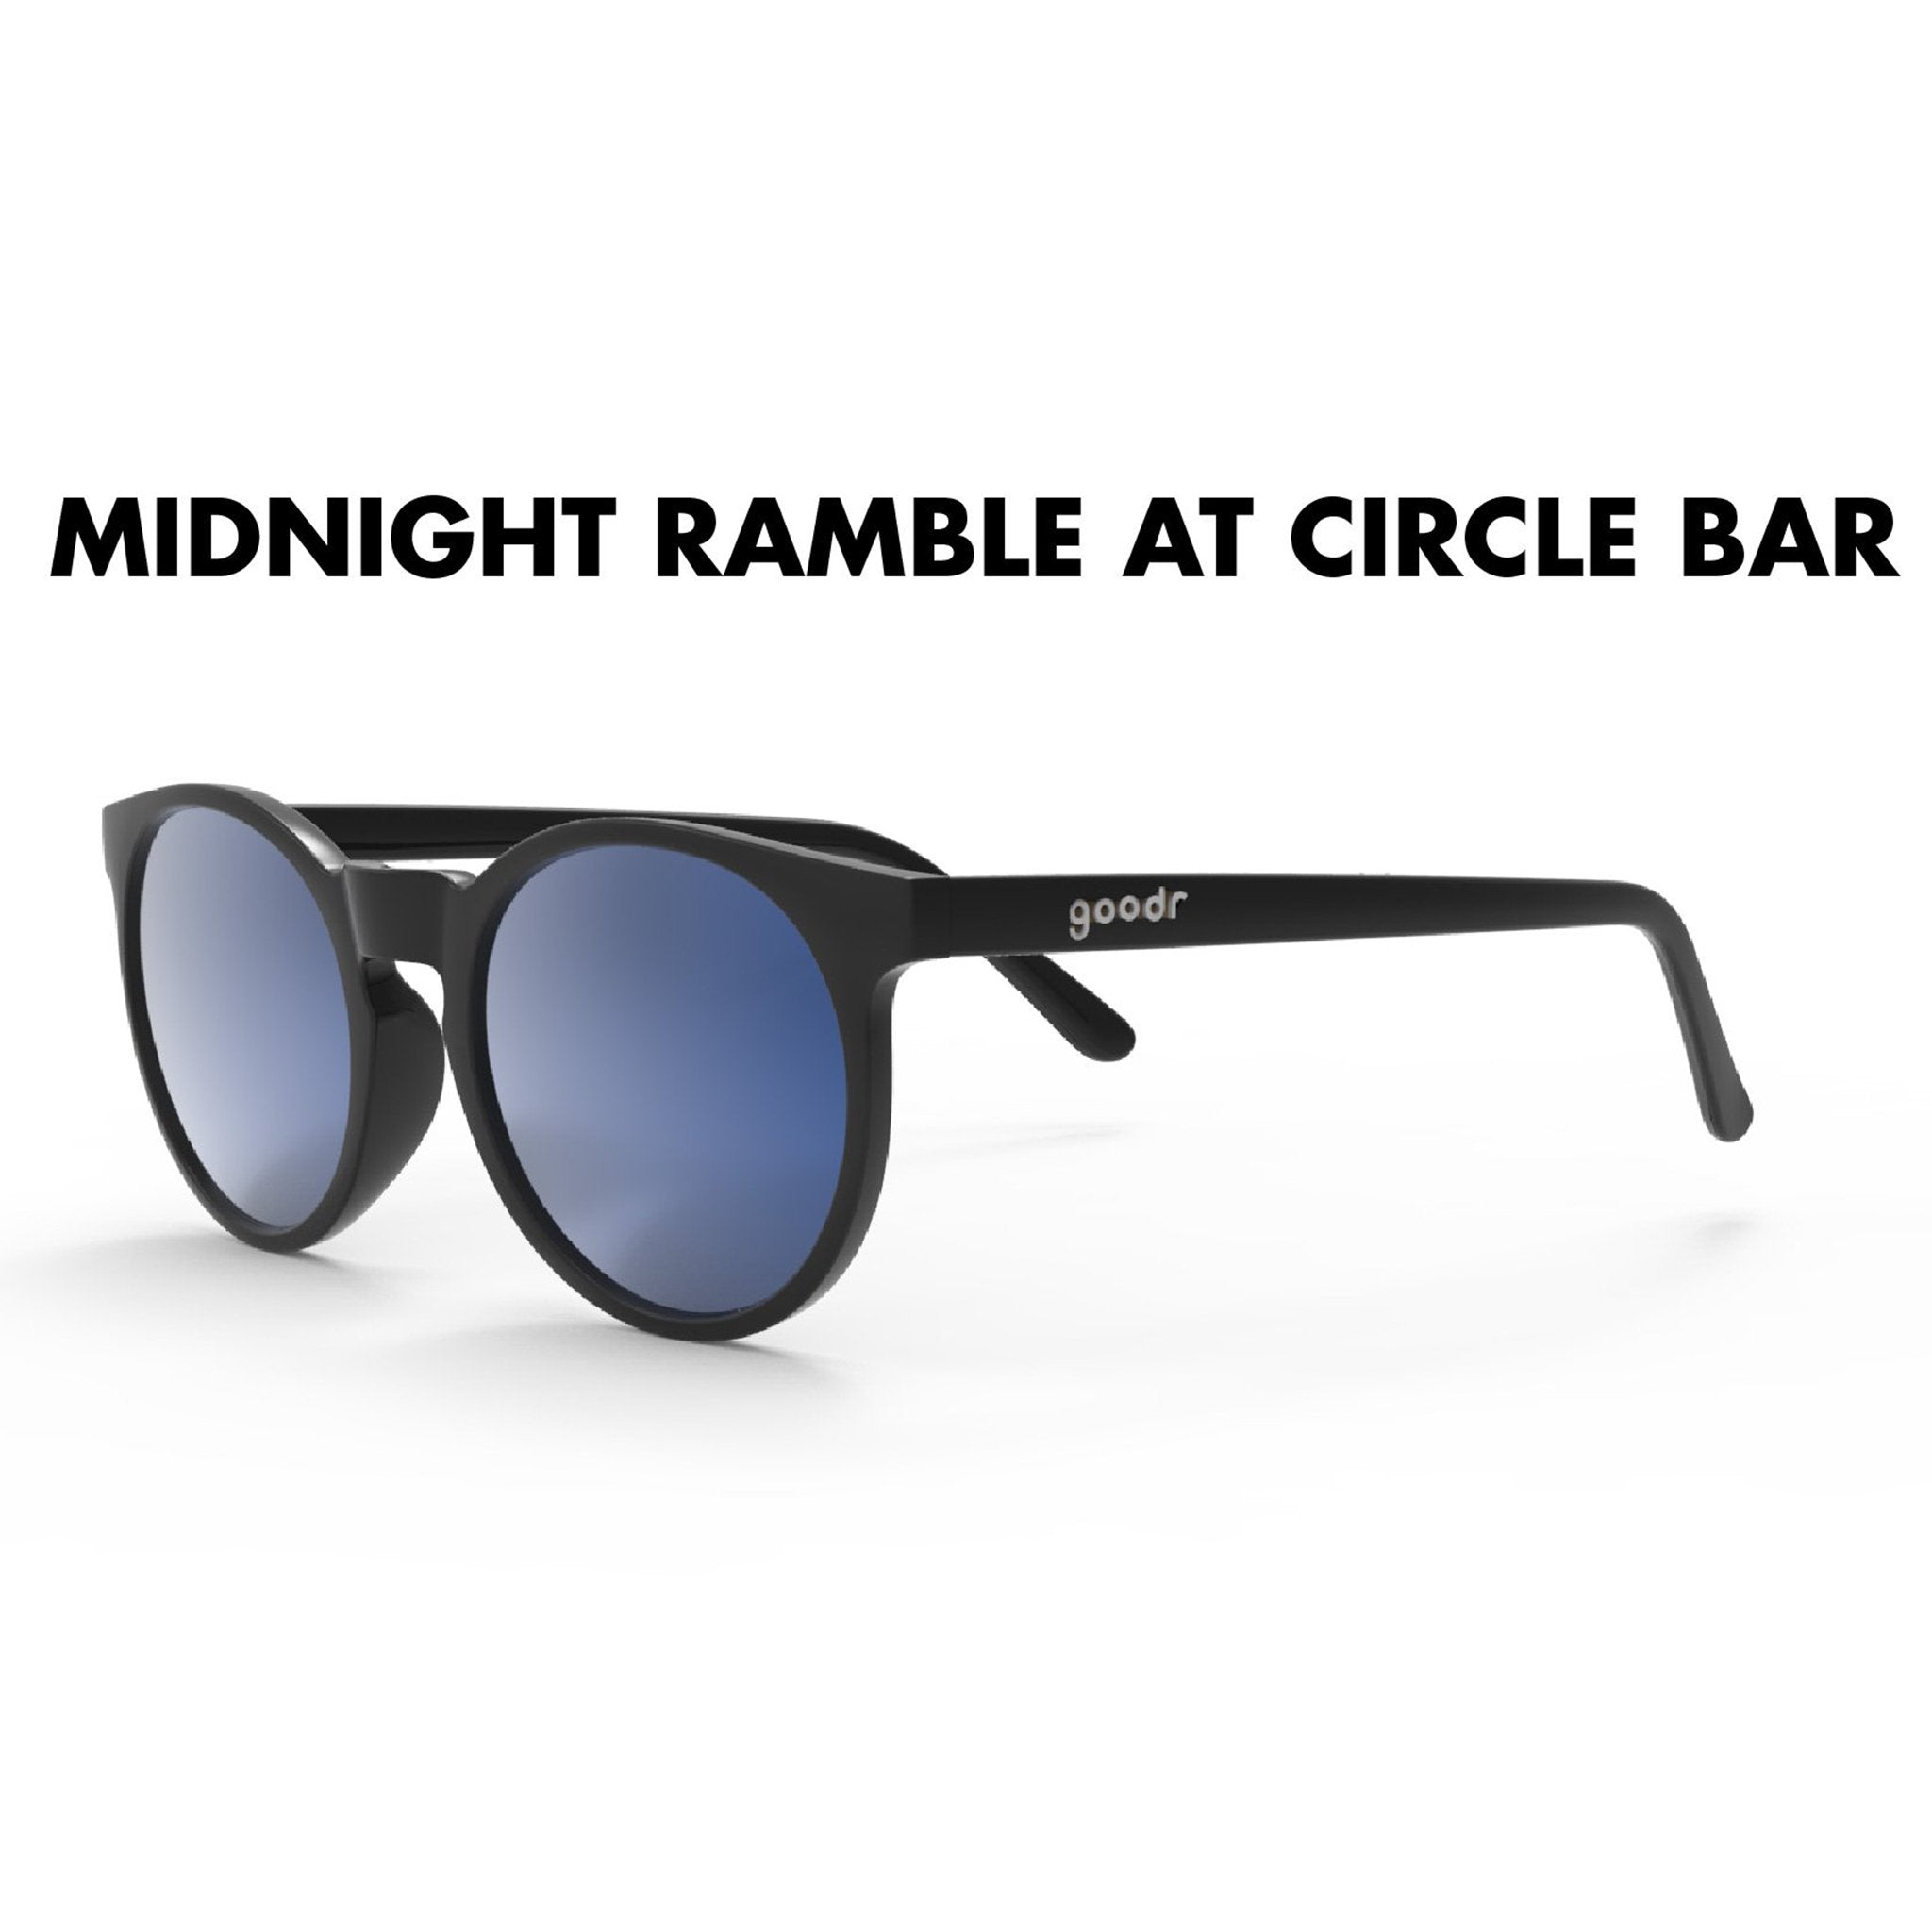 Goodr Sunglasses - Midnight Ramble at Circle Bar - Destination PSP